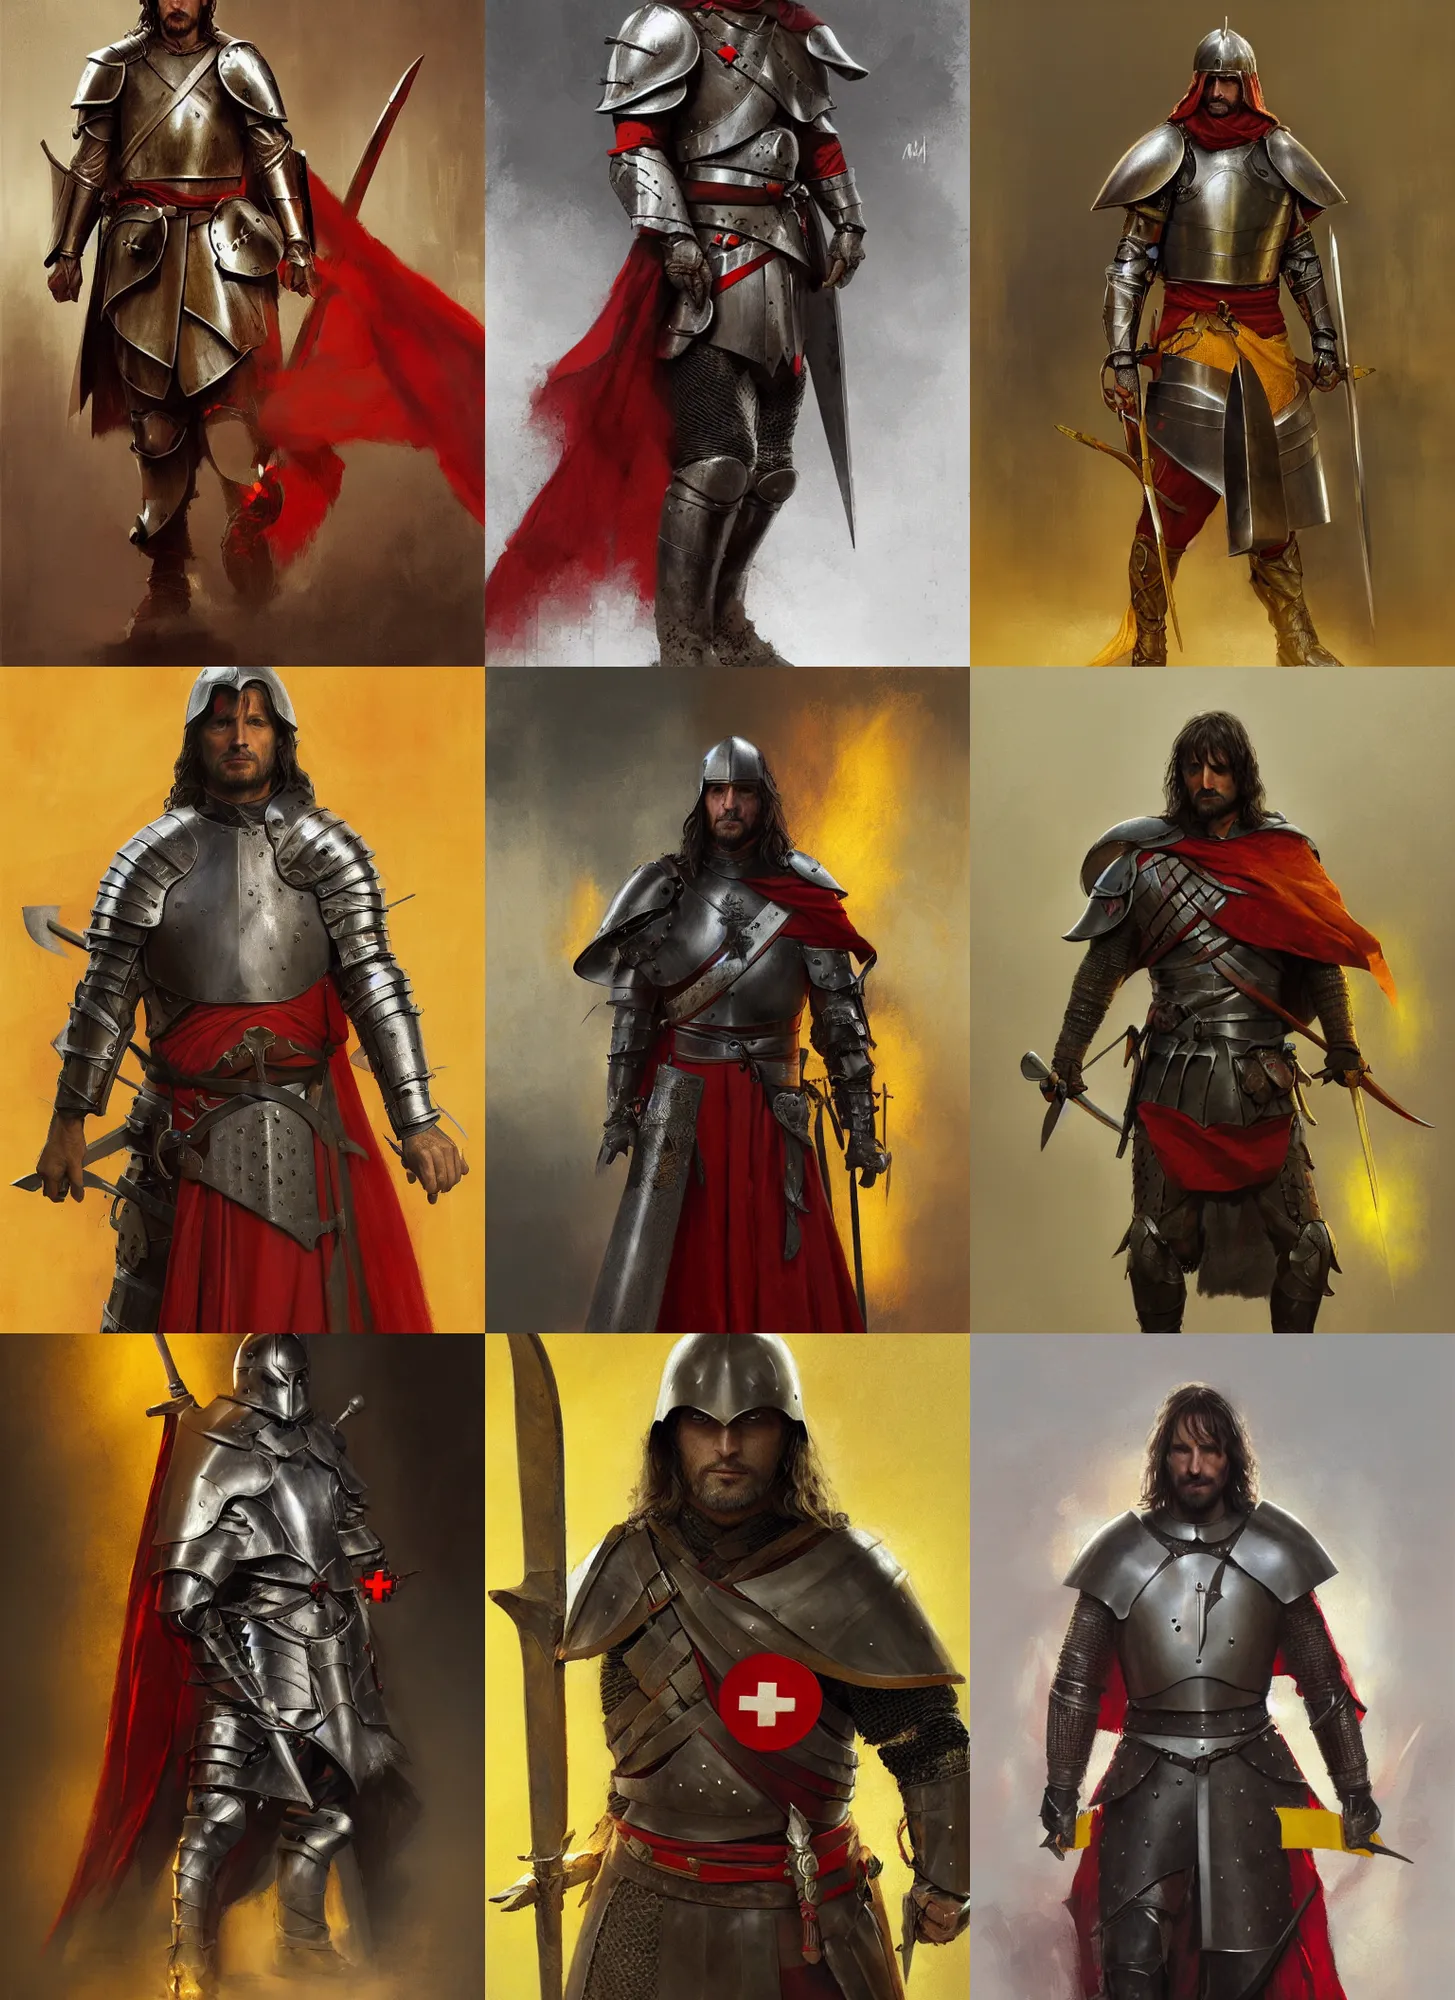 Prompt: aragorn medieval armor, dark, red cross on yellow flag, intricate, highly detailed, smooth, artstation, digital illustration, ruan jia, mandy jurgens, rutkowski